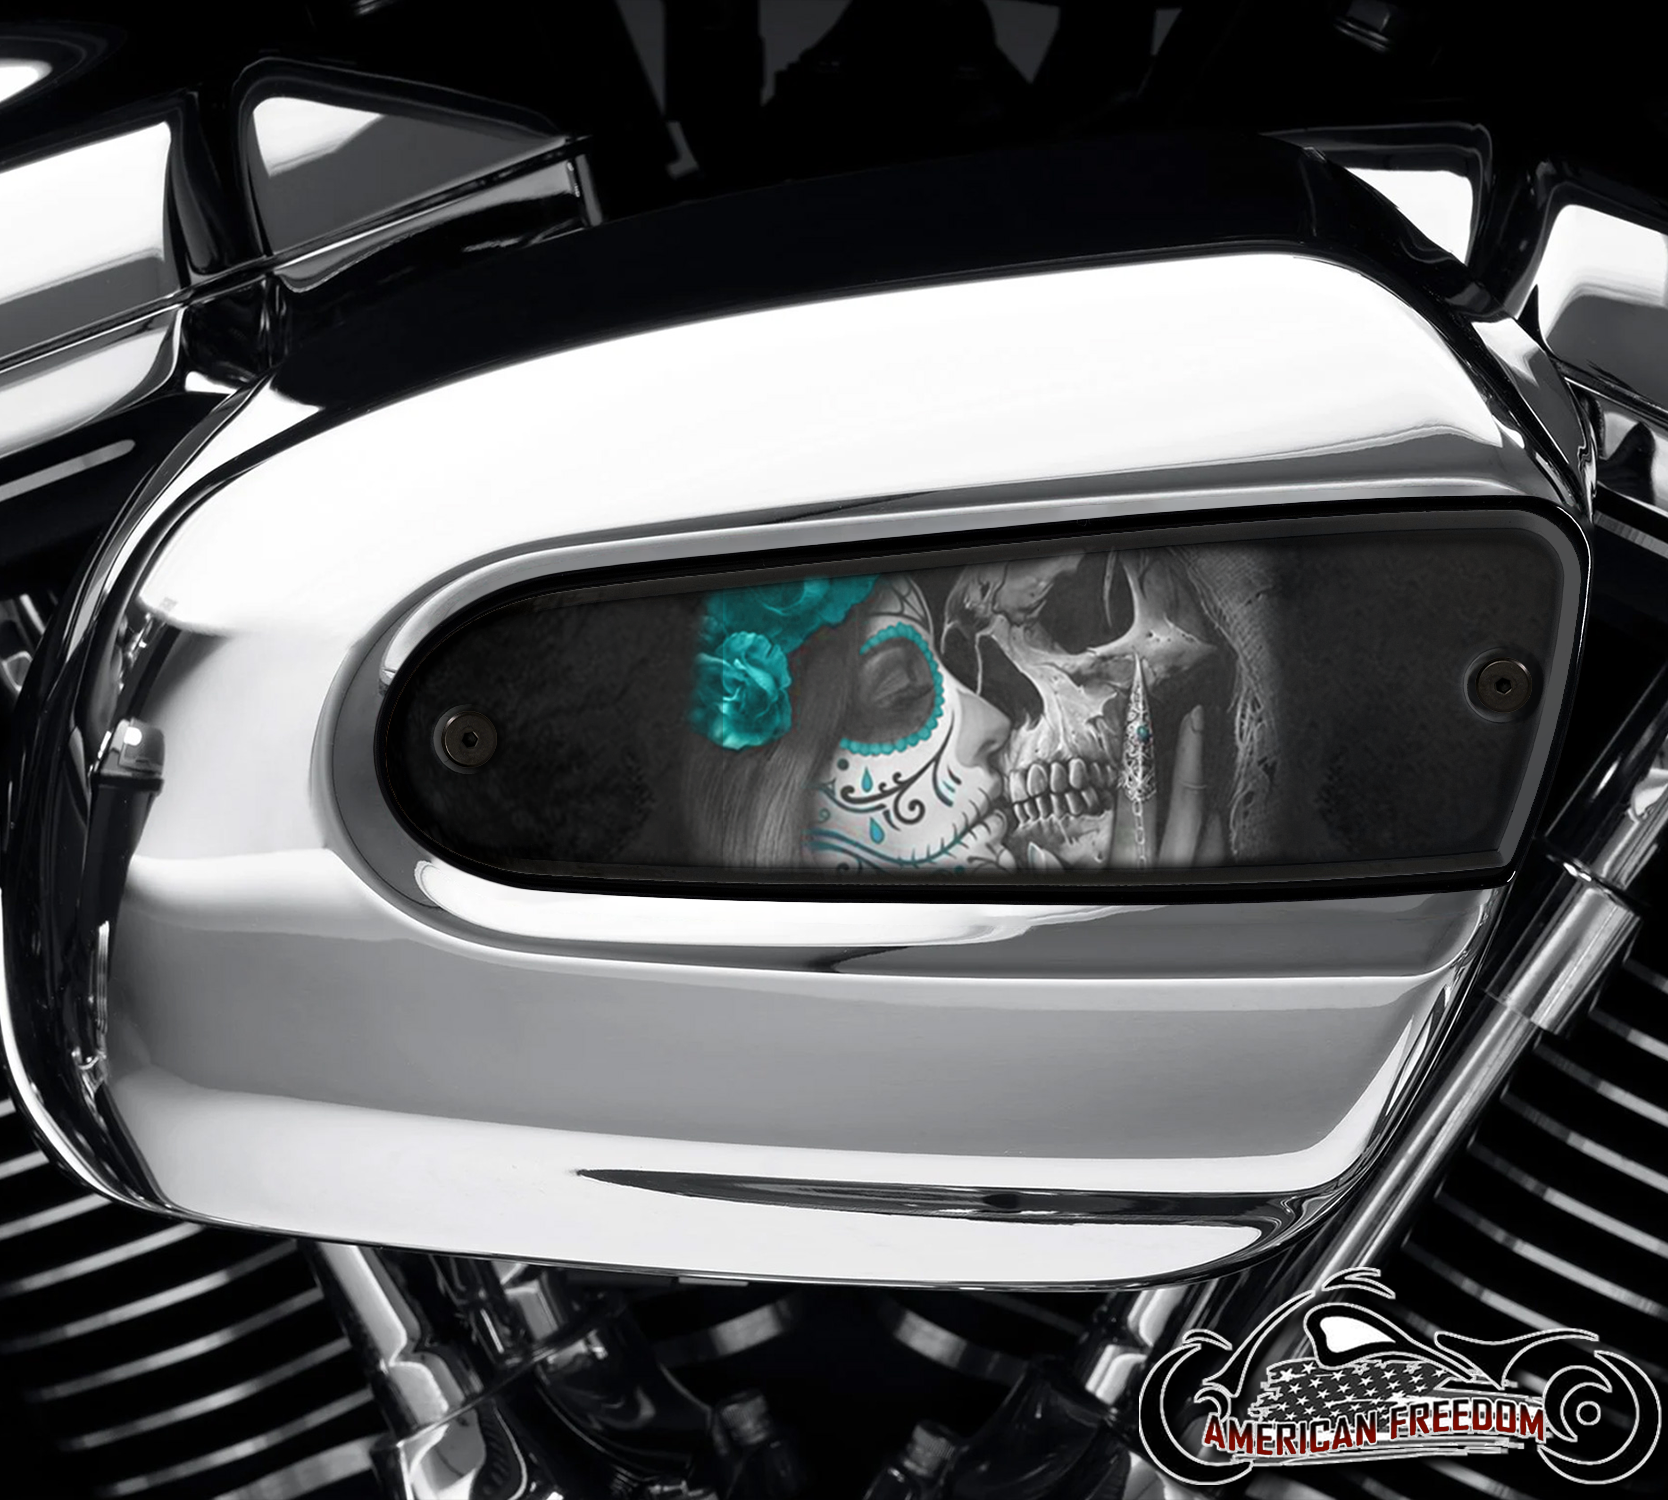 Harley Davidson Wedge Air Cleaner Insert - Death Kiss (Teal)